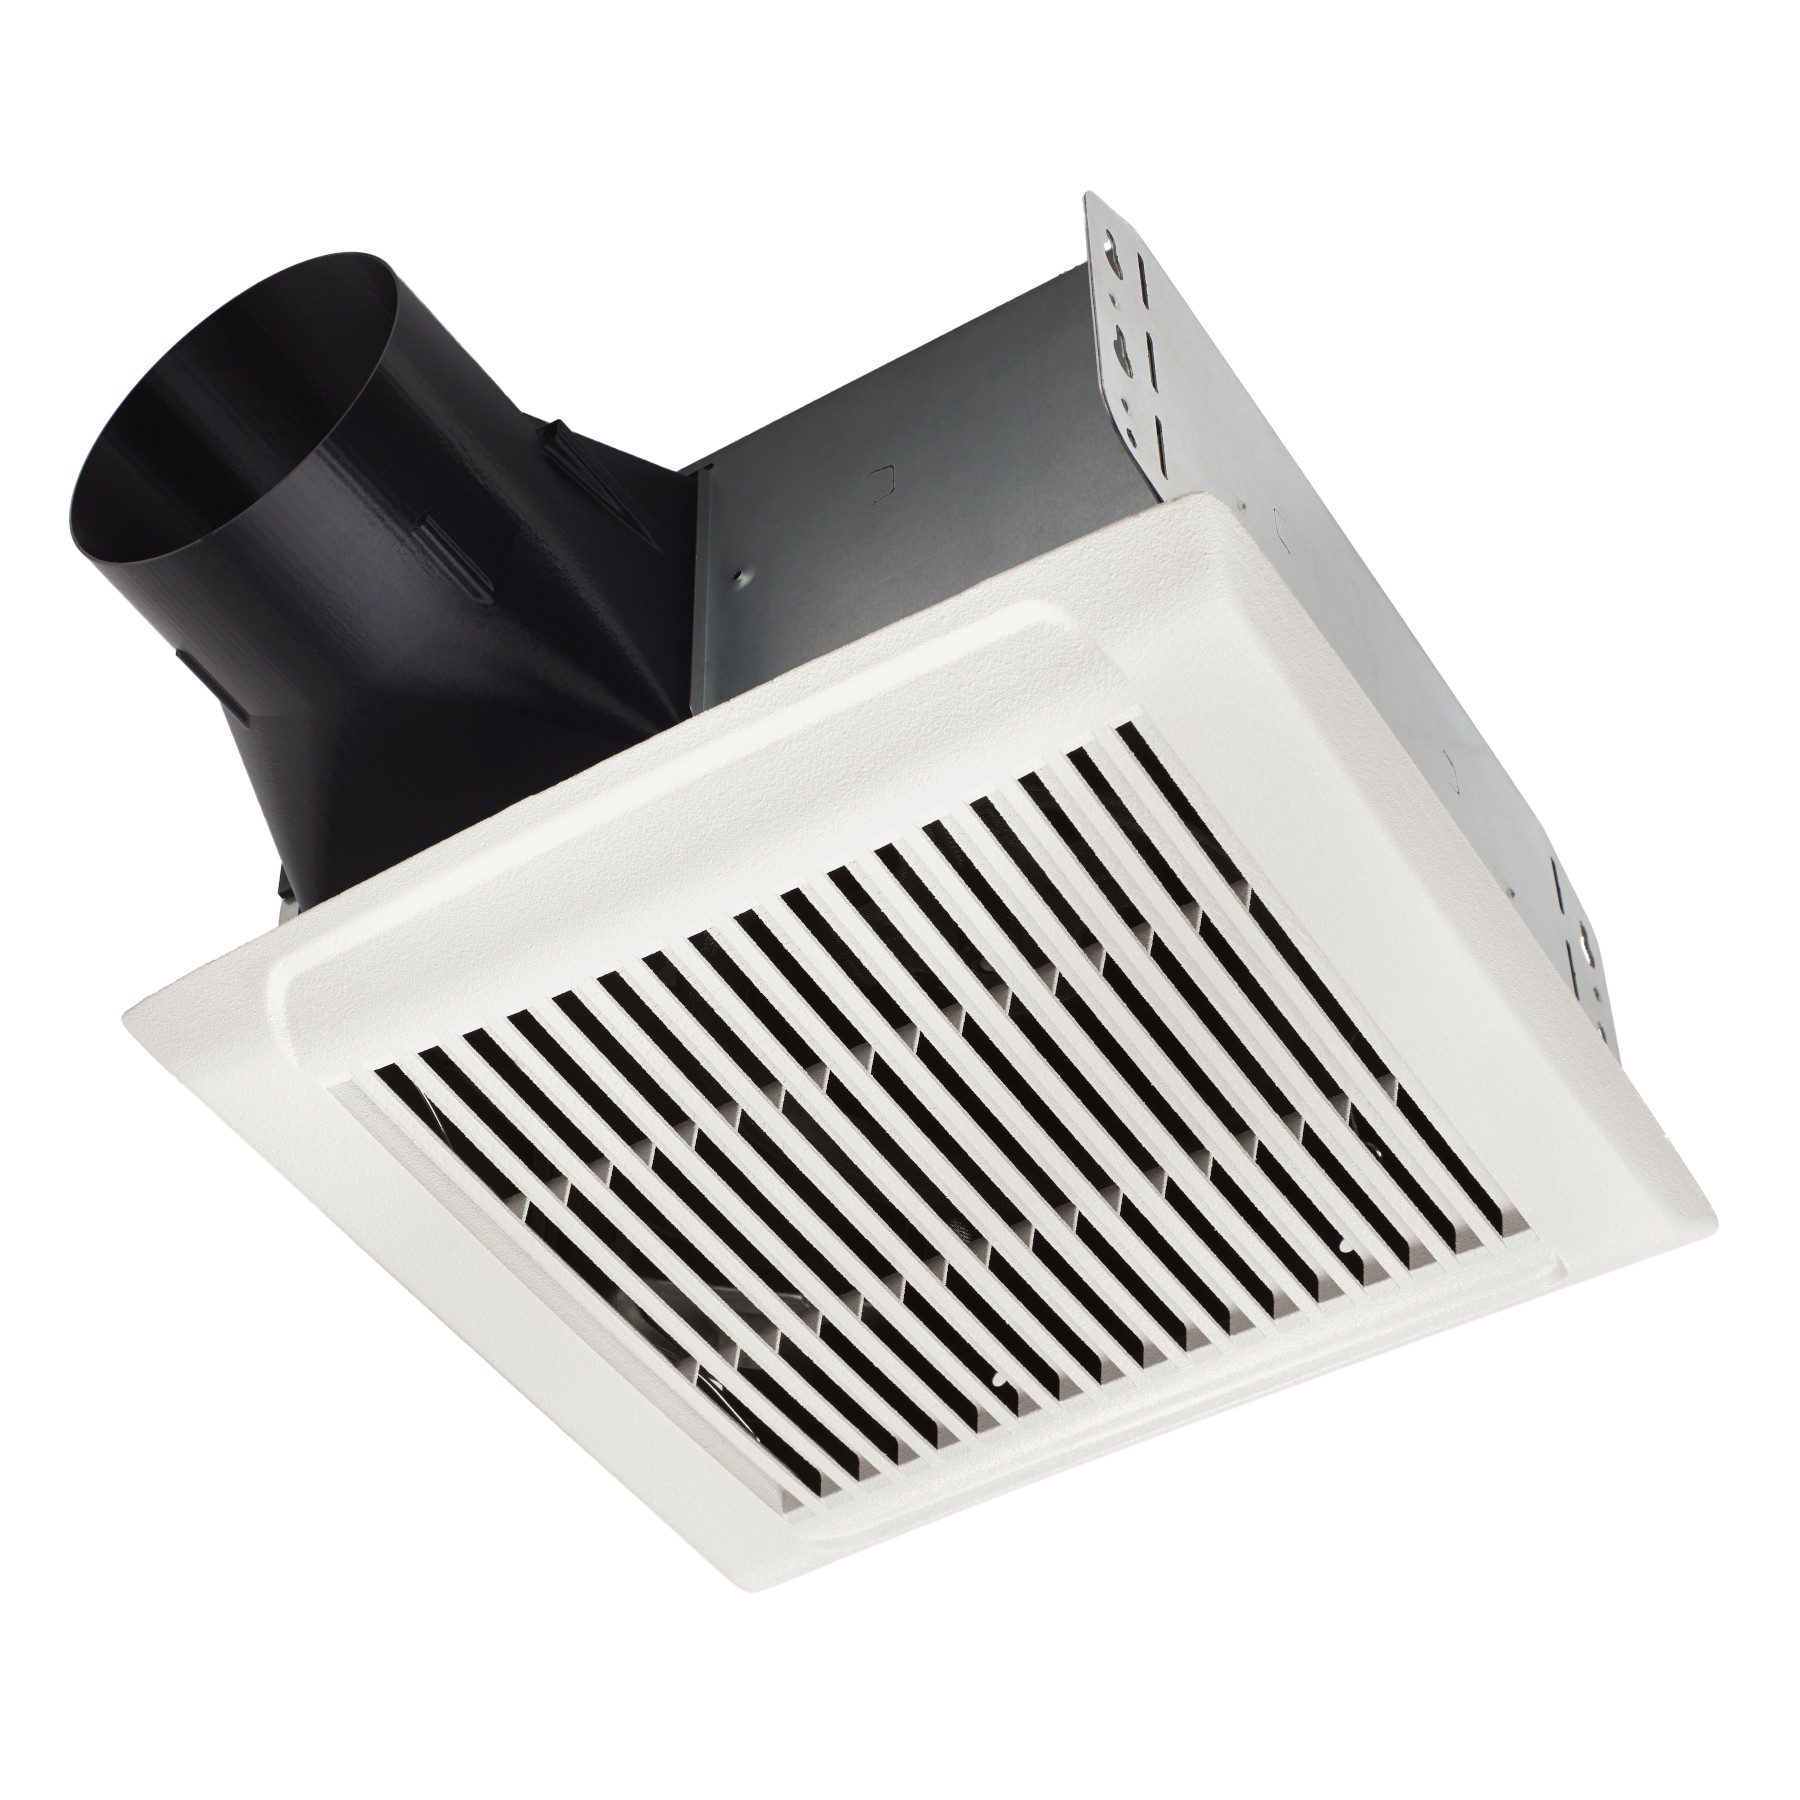 DISCONTINUED: NuTone®80 CFM Ventilation Fan, 0.8 Sones, ENERGY STAR Certified